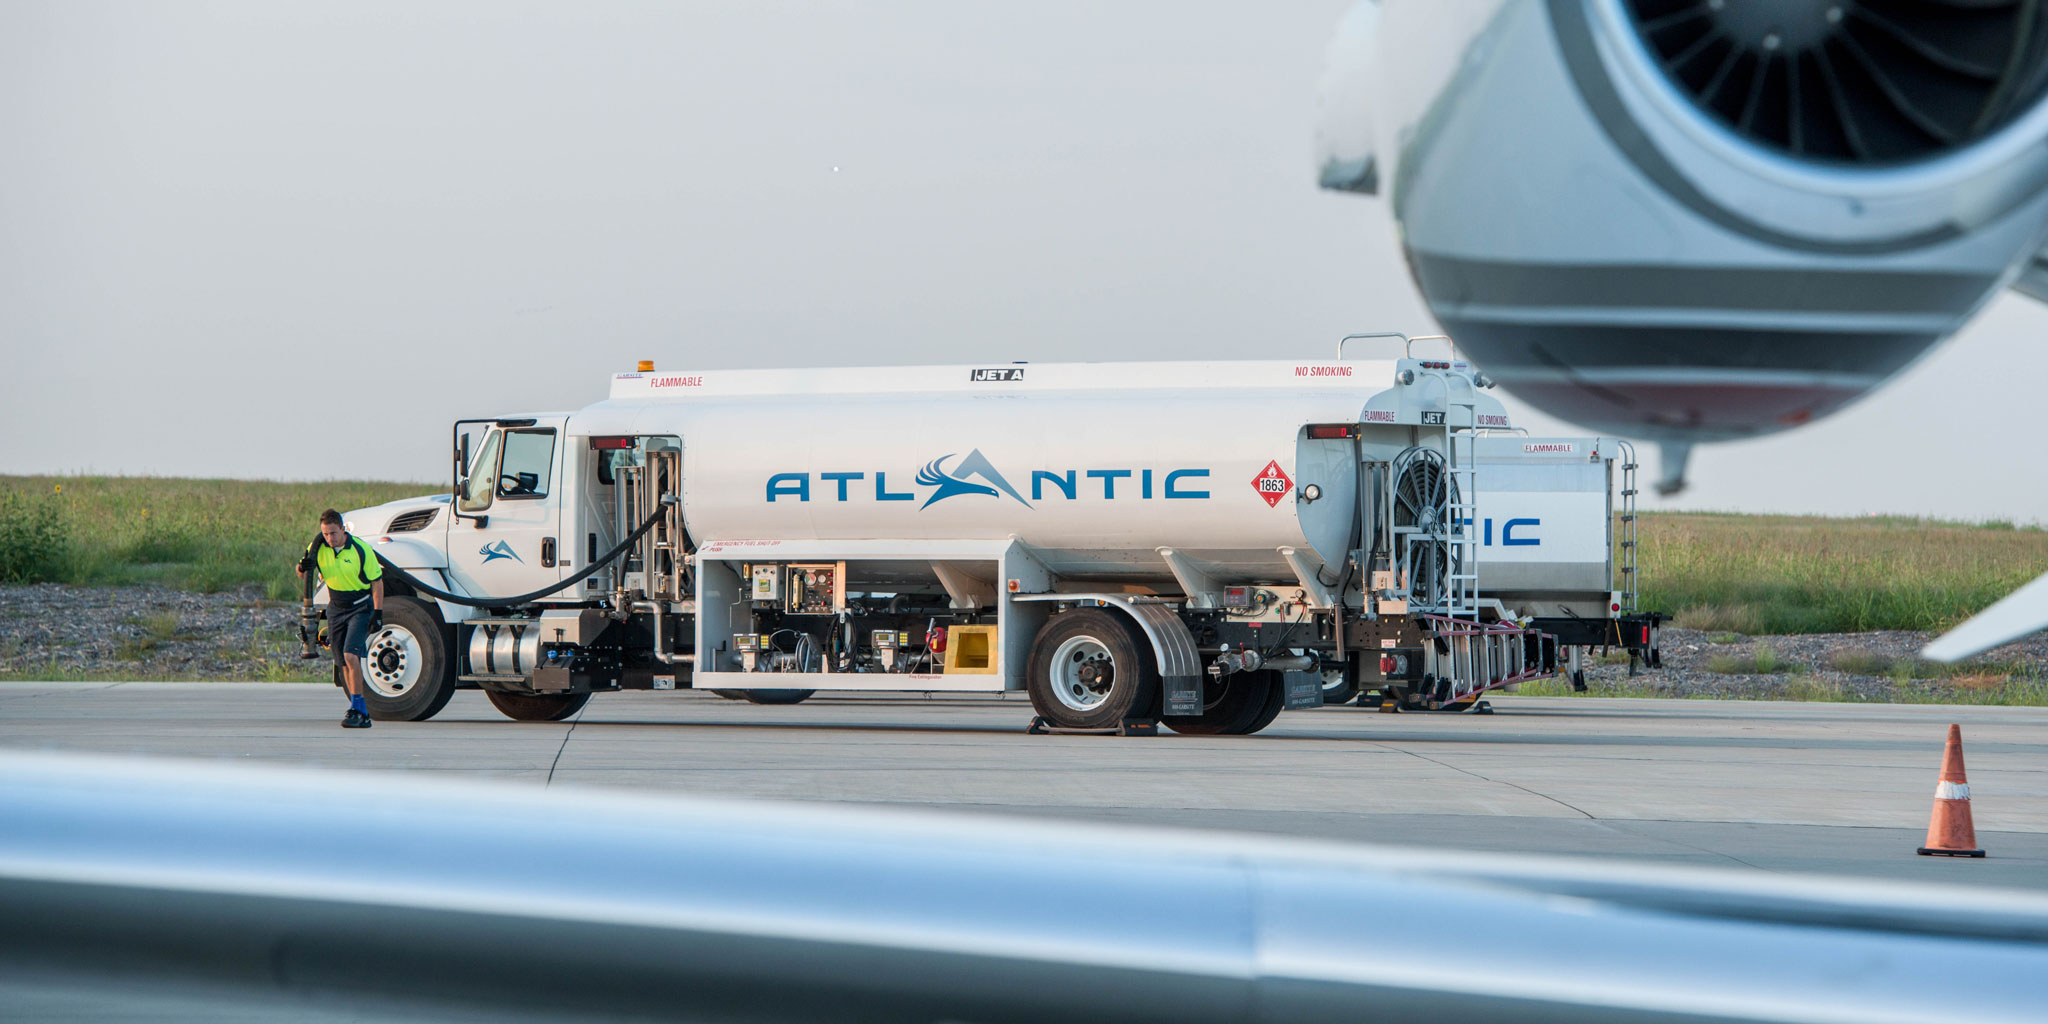 Atlantic Aviation tanker